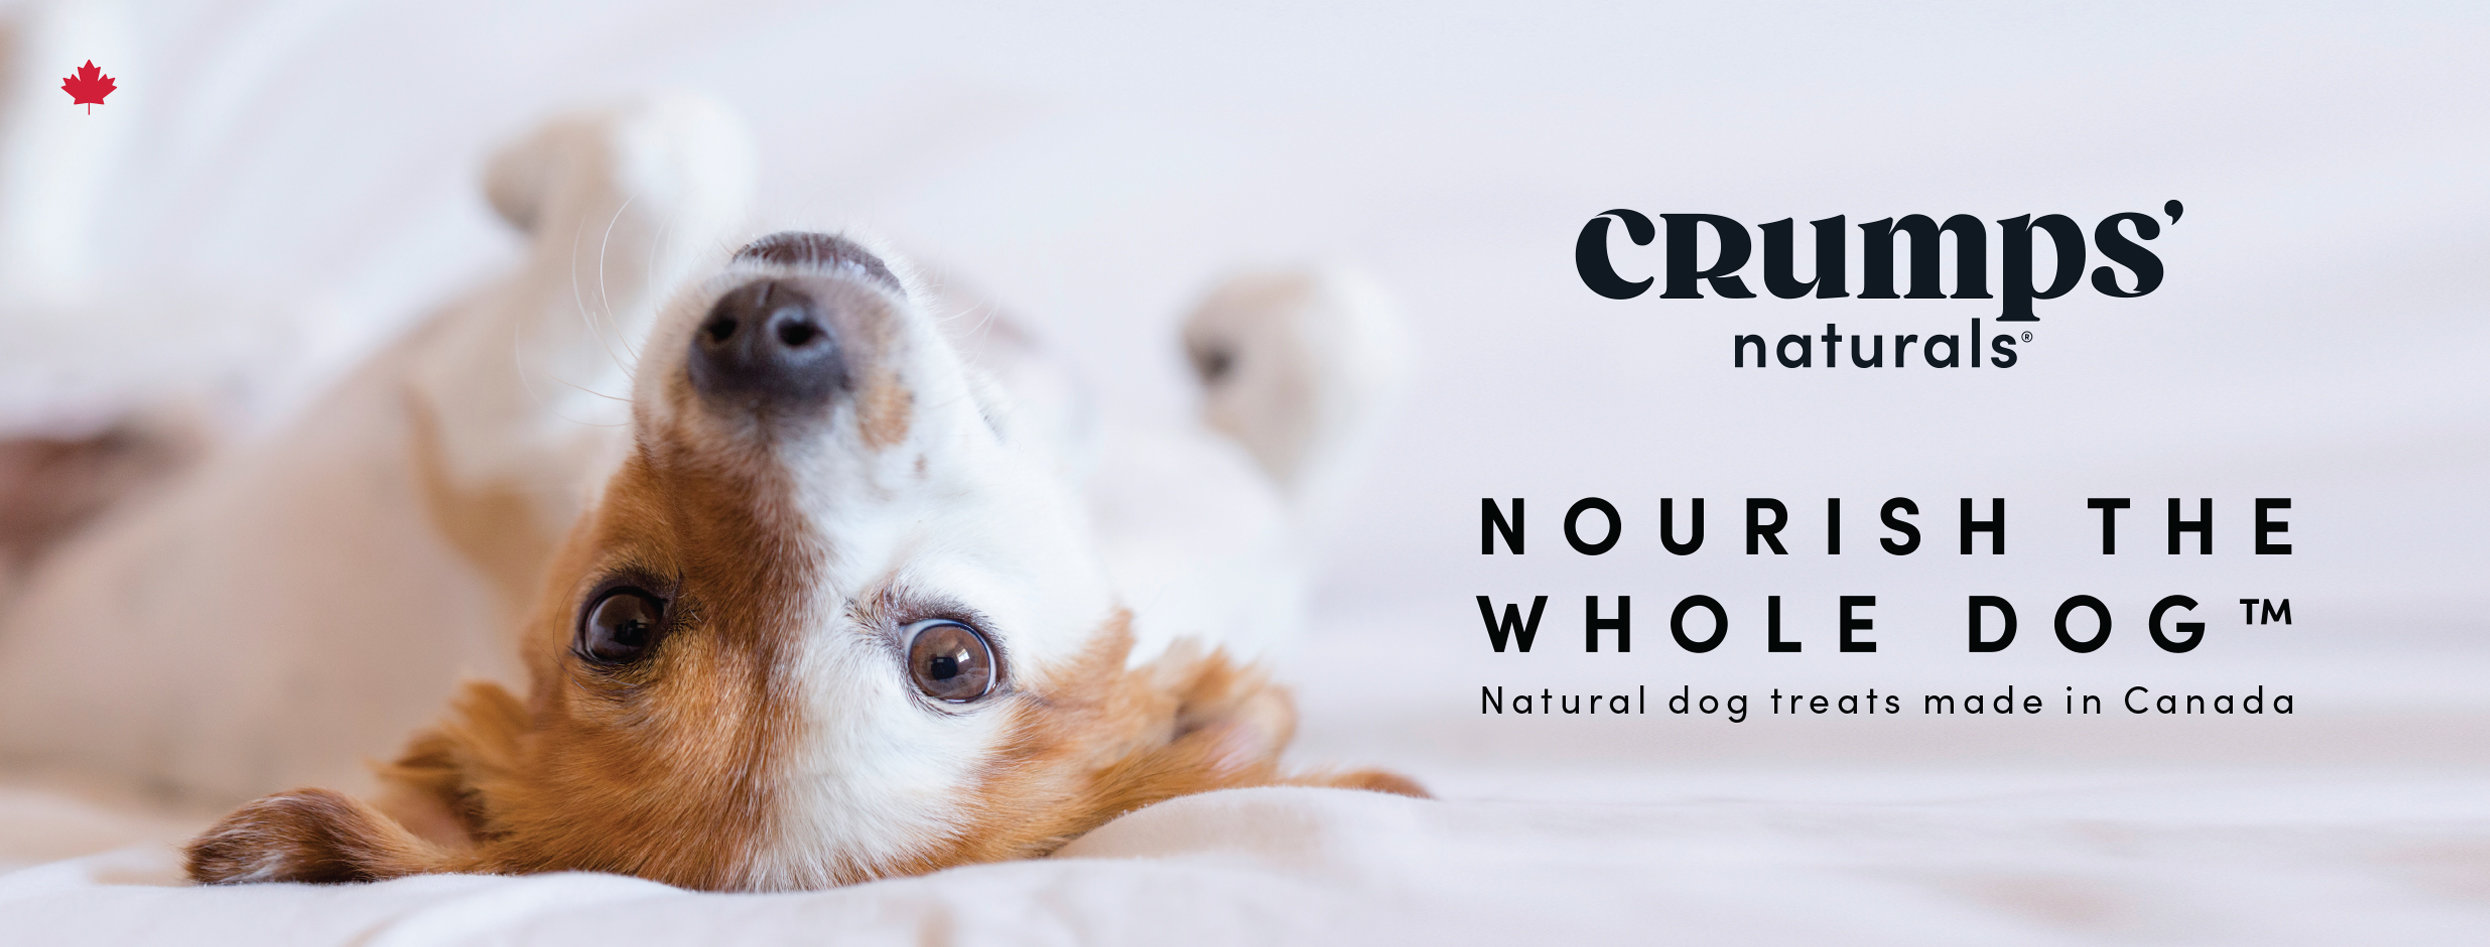 Crumps Naturals - Nourish the Whole Dog